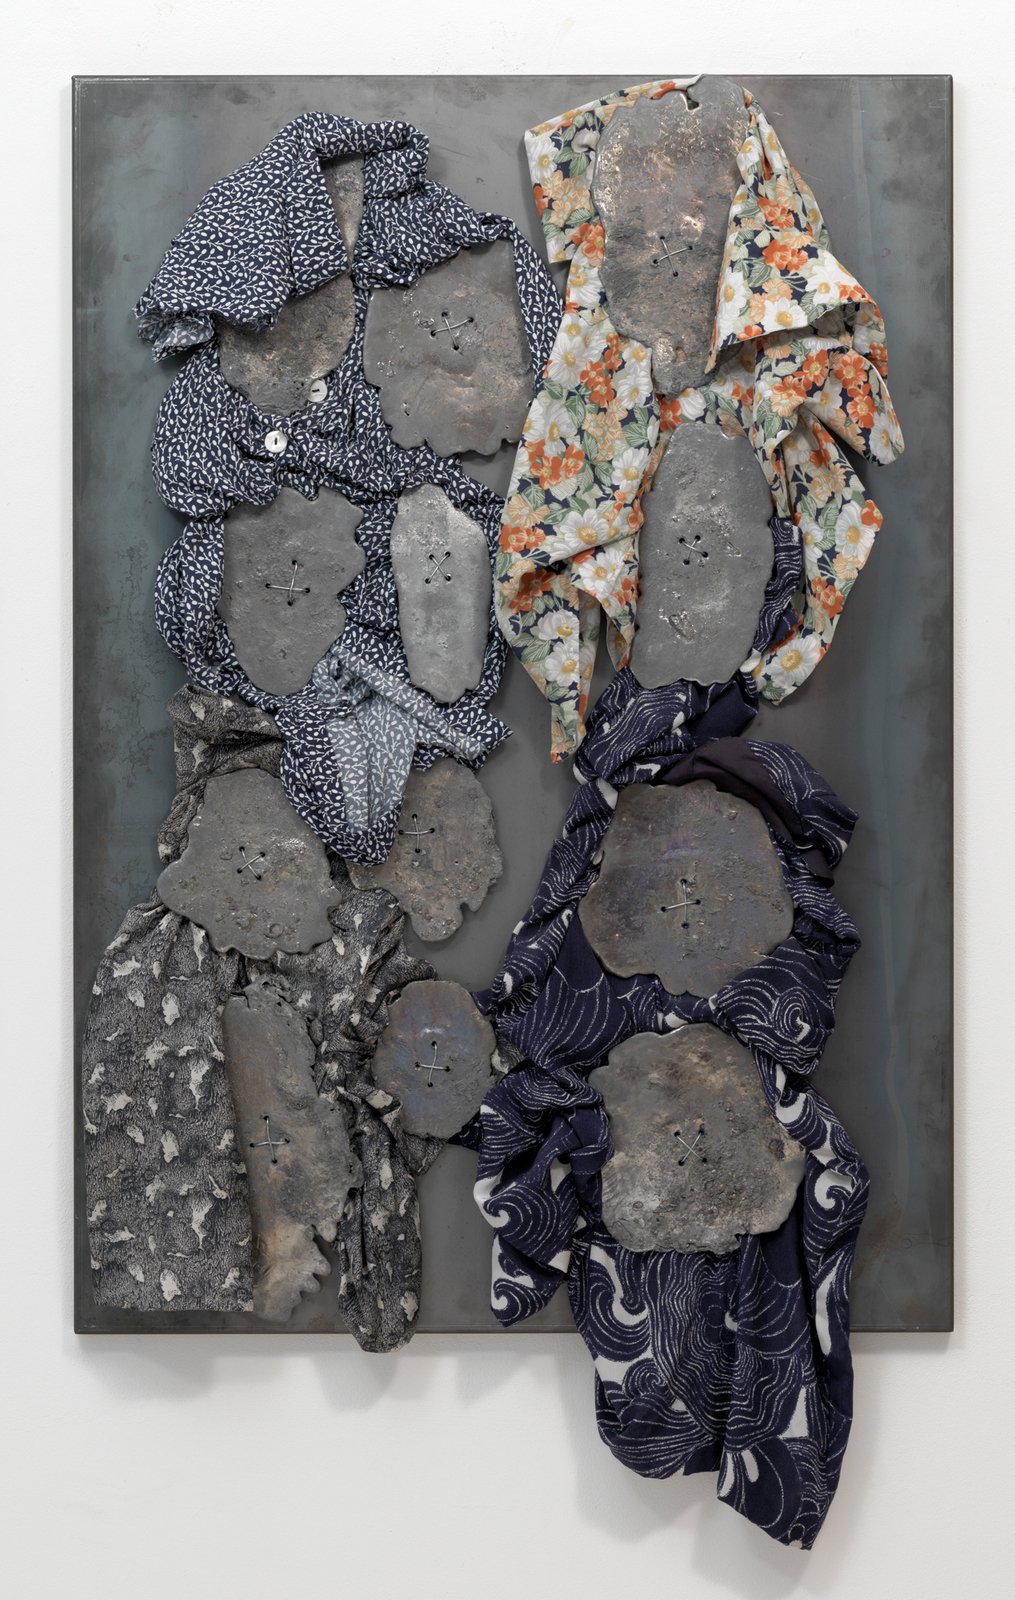 Jannis Kounellis. Untitled, 2008